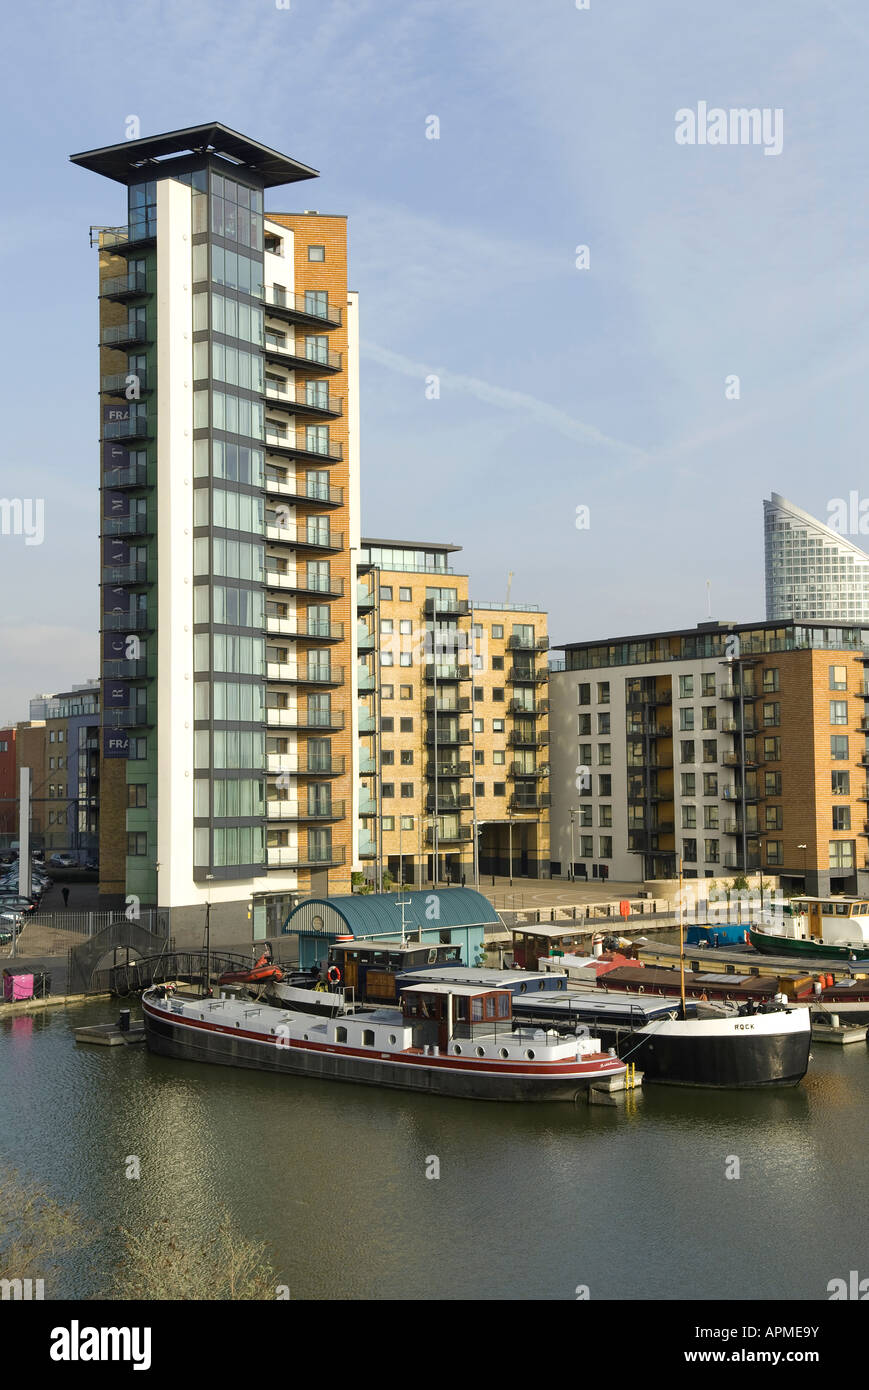 Appartamento a torre, Docklands, Londra, Inghilterra Foto Stock